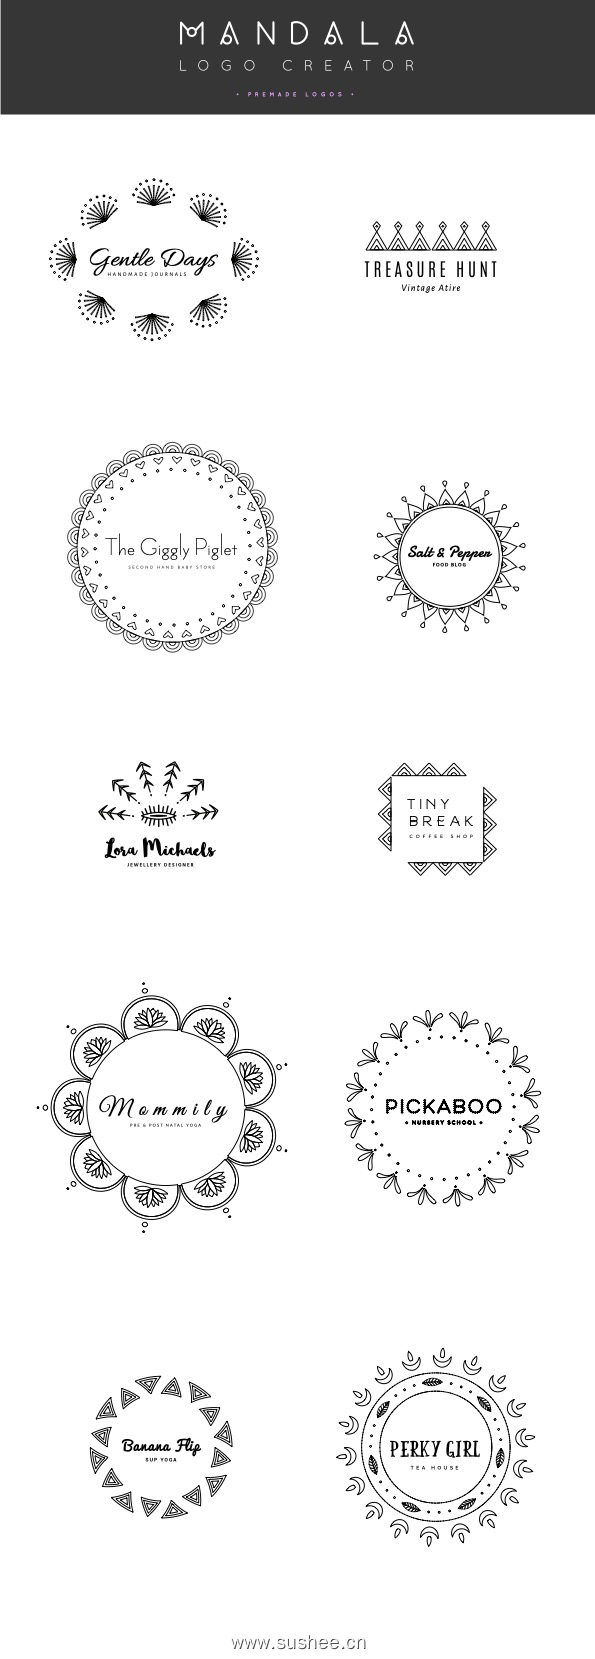 30-Premade-Logos-PDF2